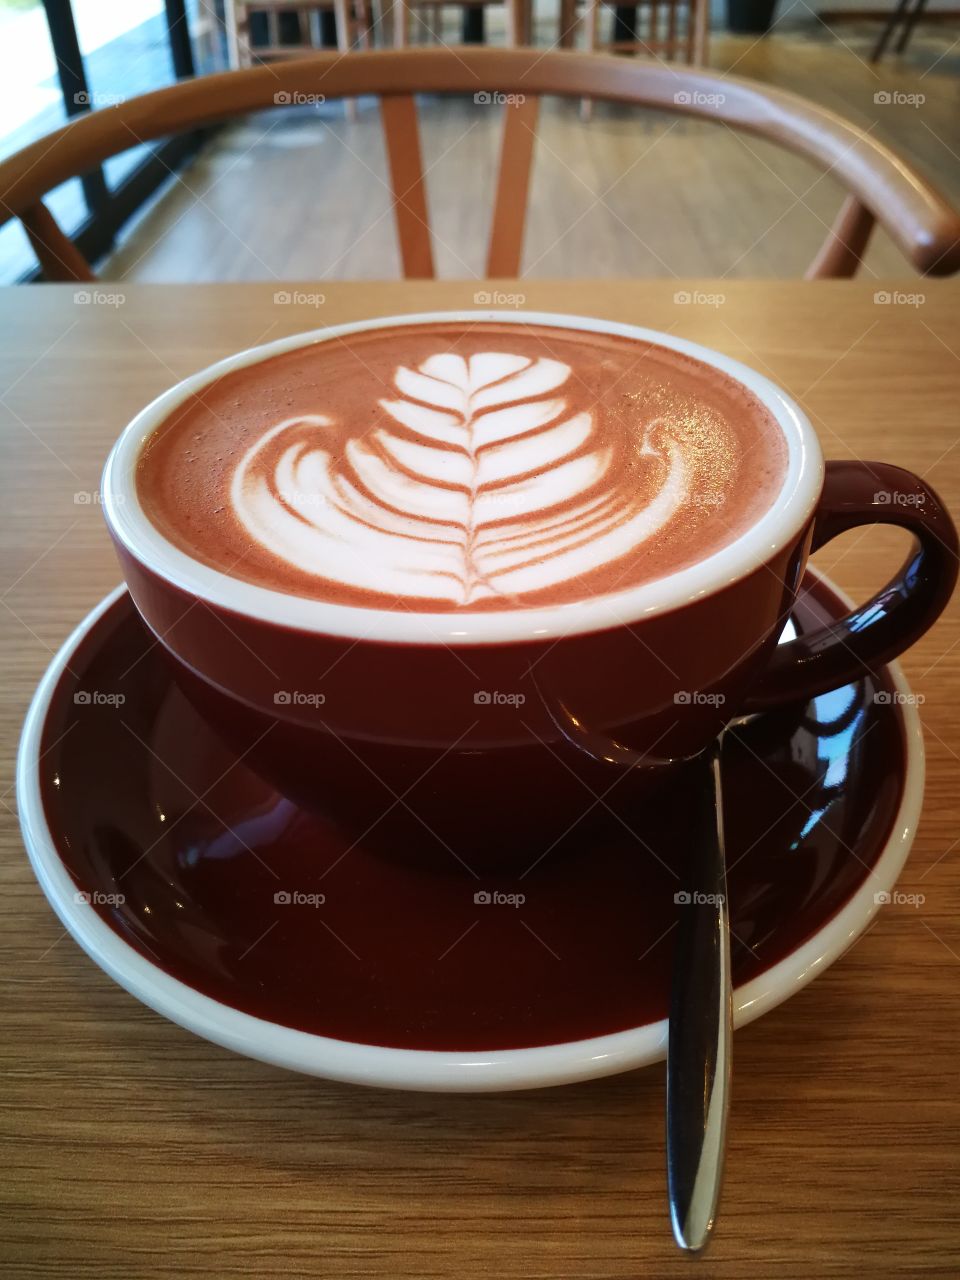 Chocolate drink at café